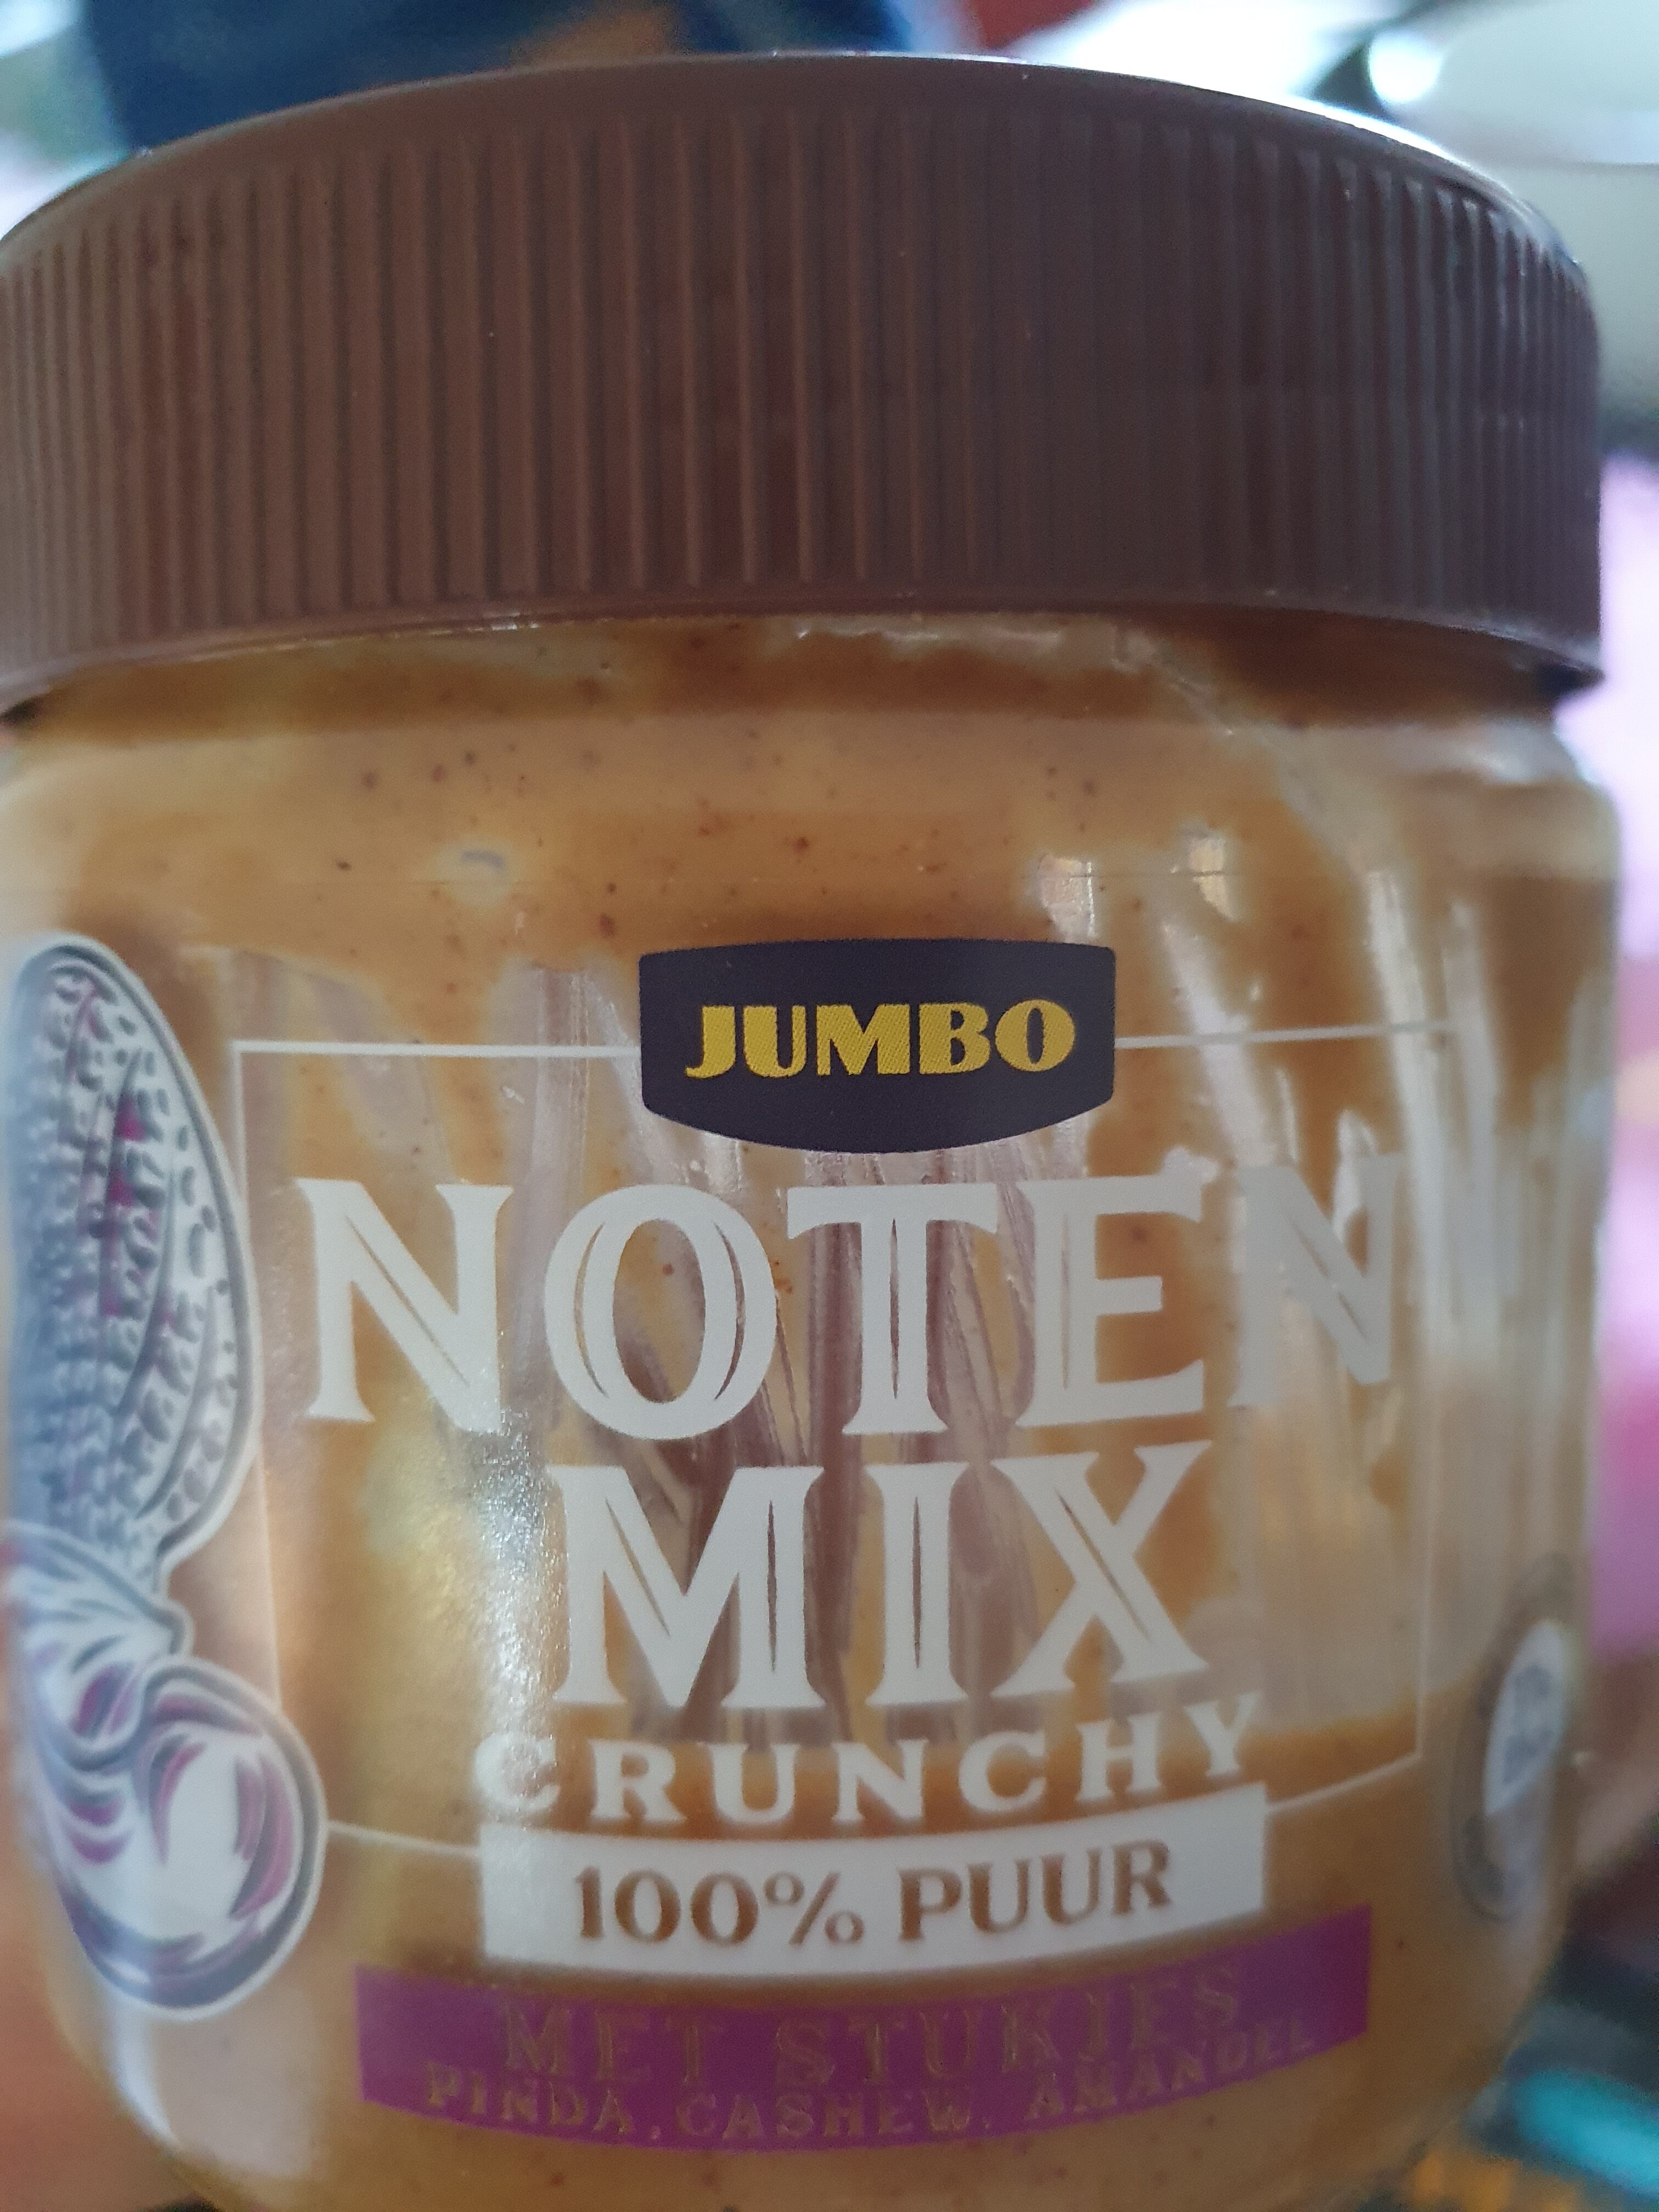 Notenmix crunchy - Product